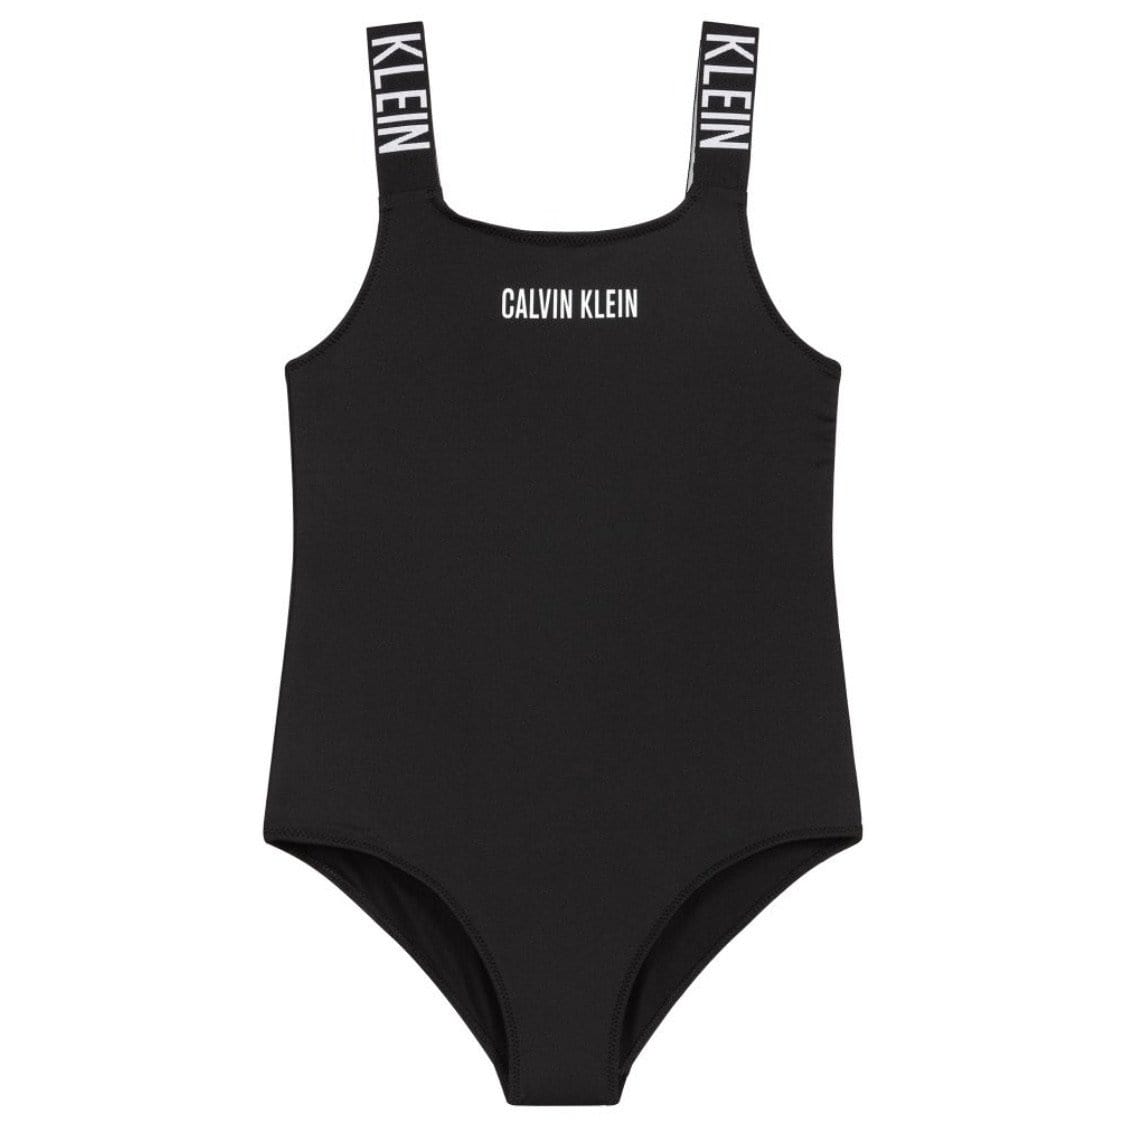 CALVIN KLEIN - Swimsuit - Black